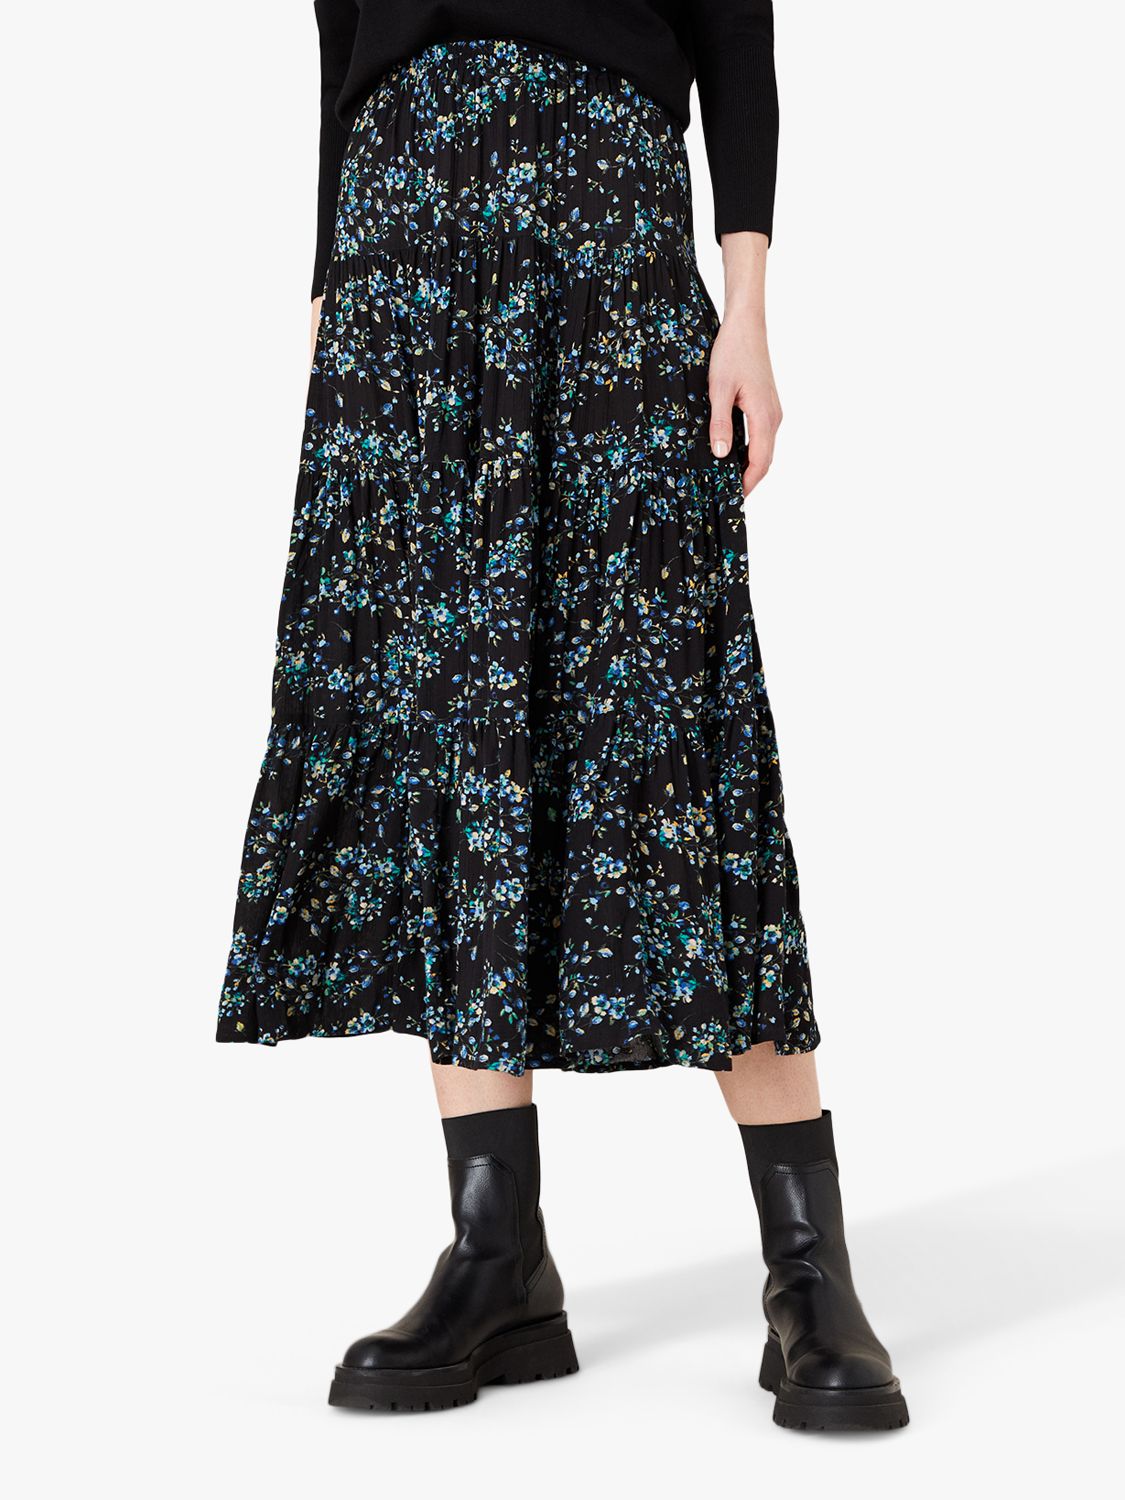 Monsoon Floral Print Midi Skirt, Black/Multi at John Lewis & Partners